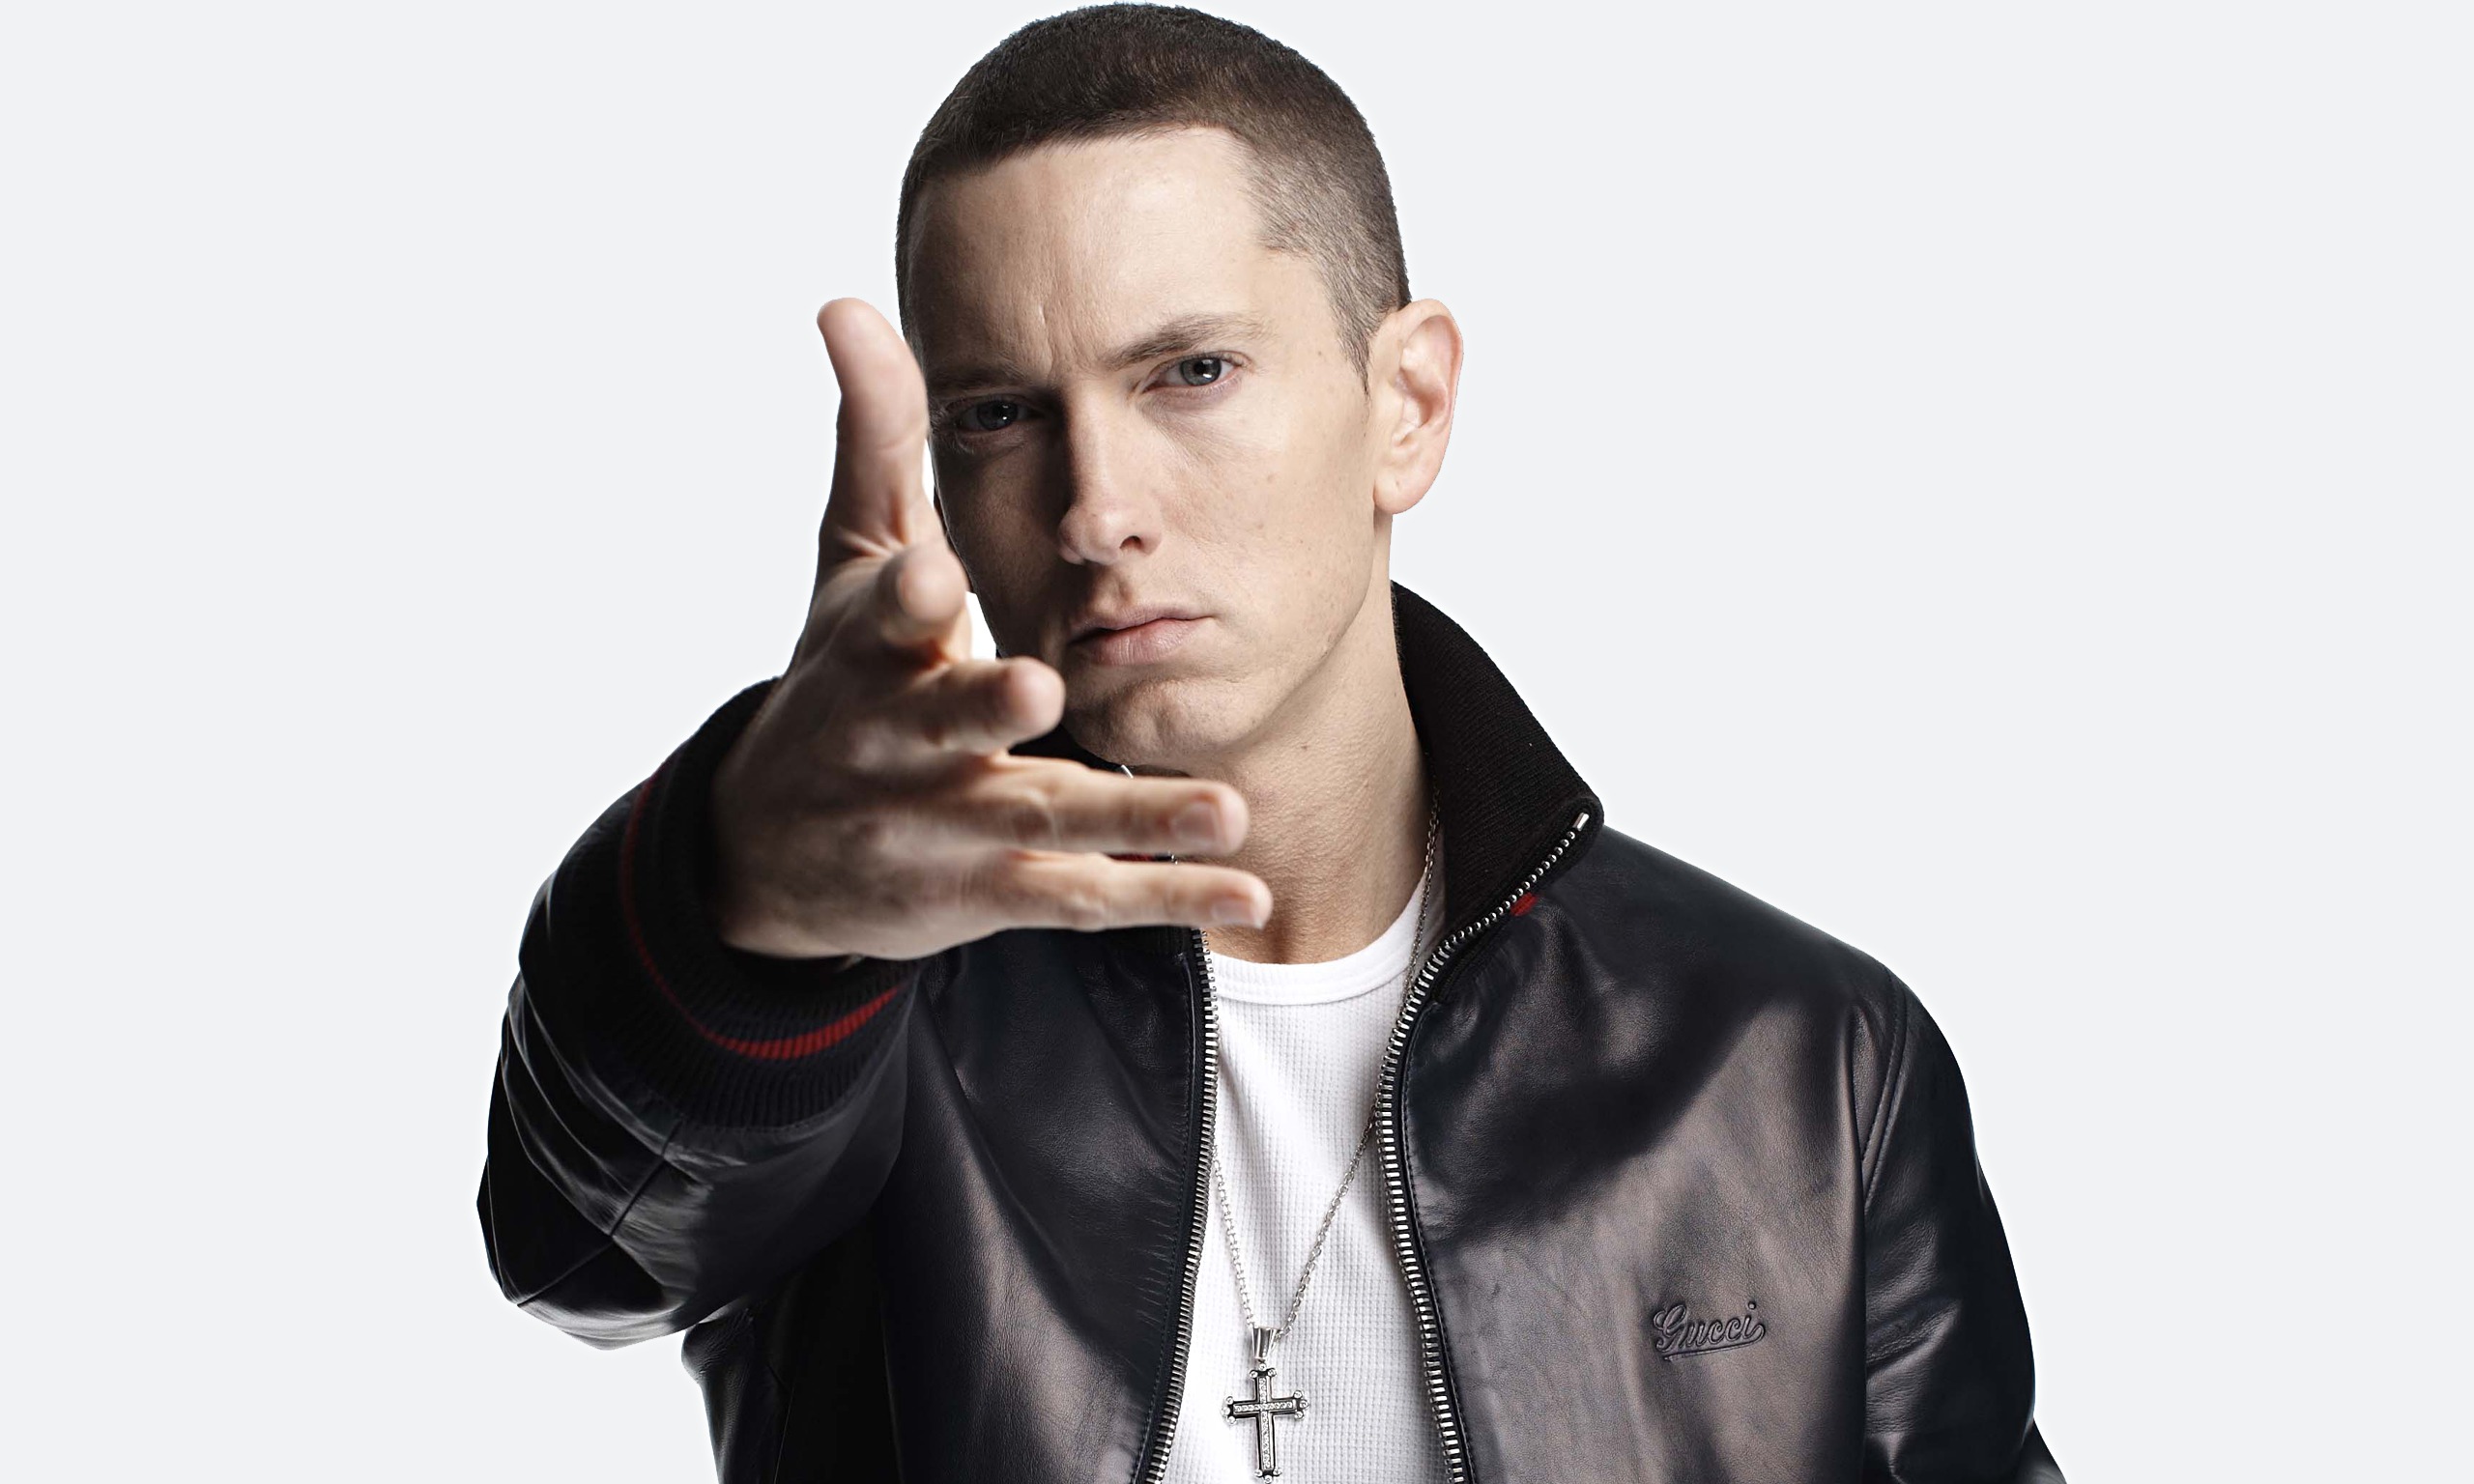 Baffling Celeb Conspiracy Theories After Eminem Clone Claim